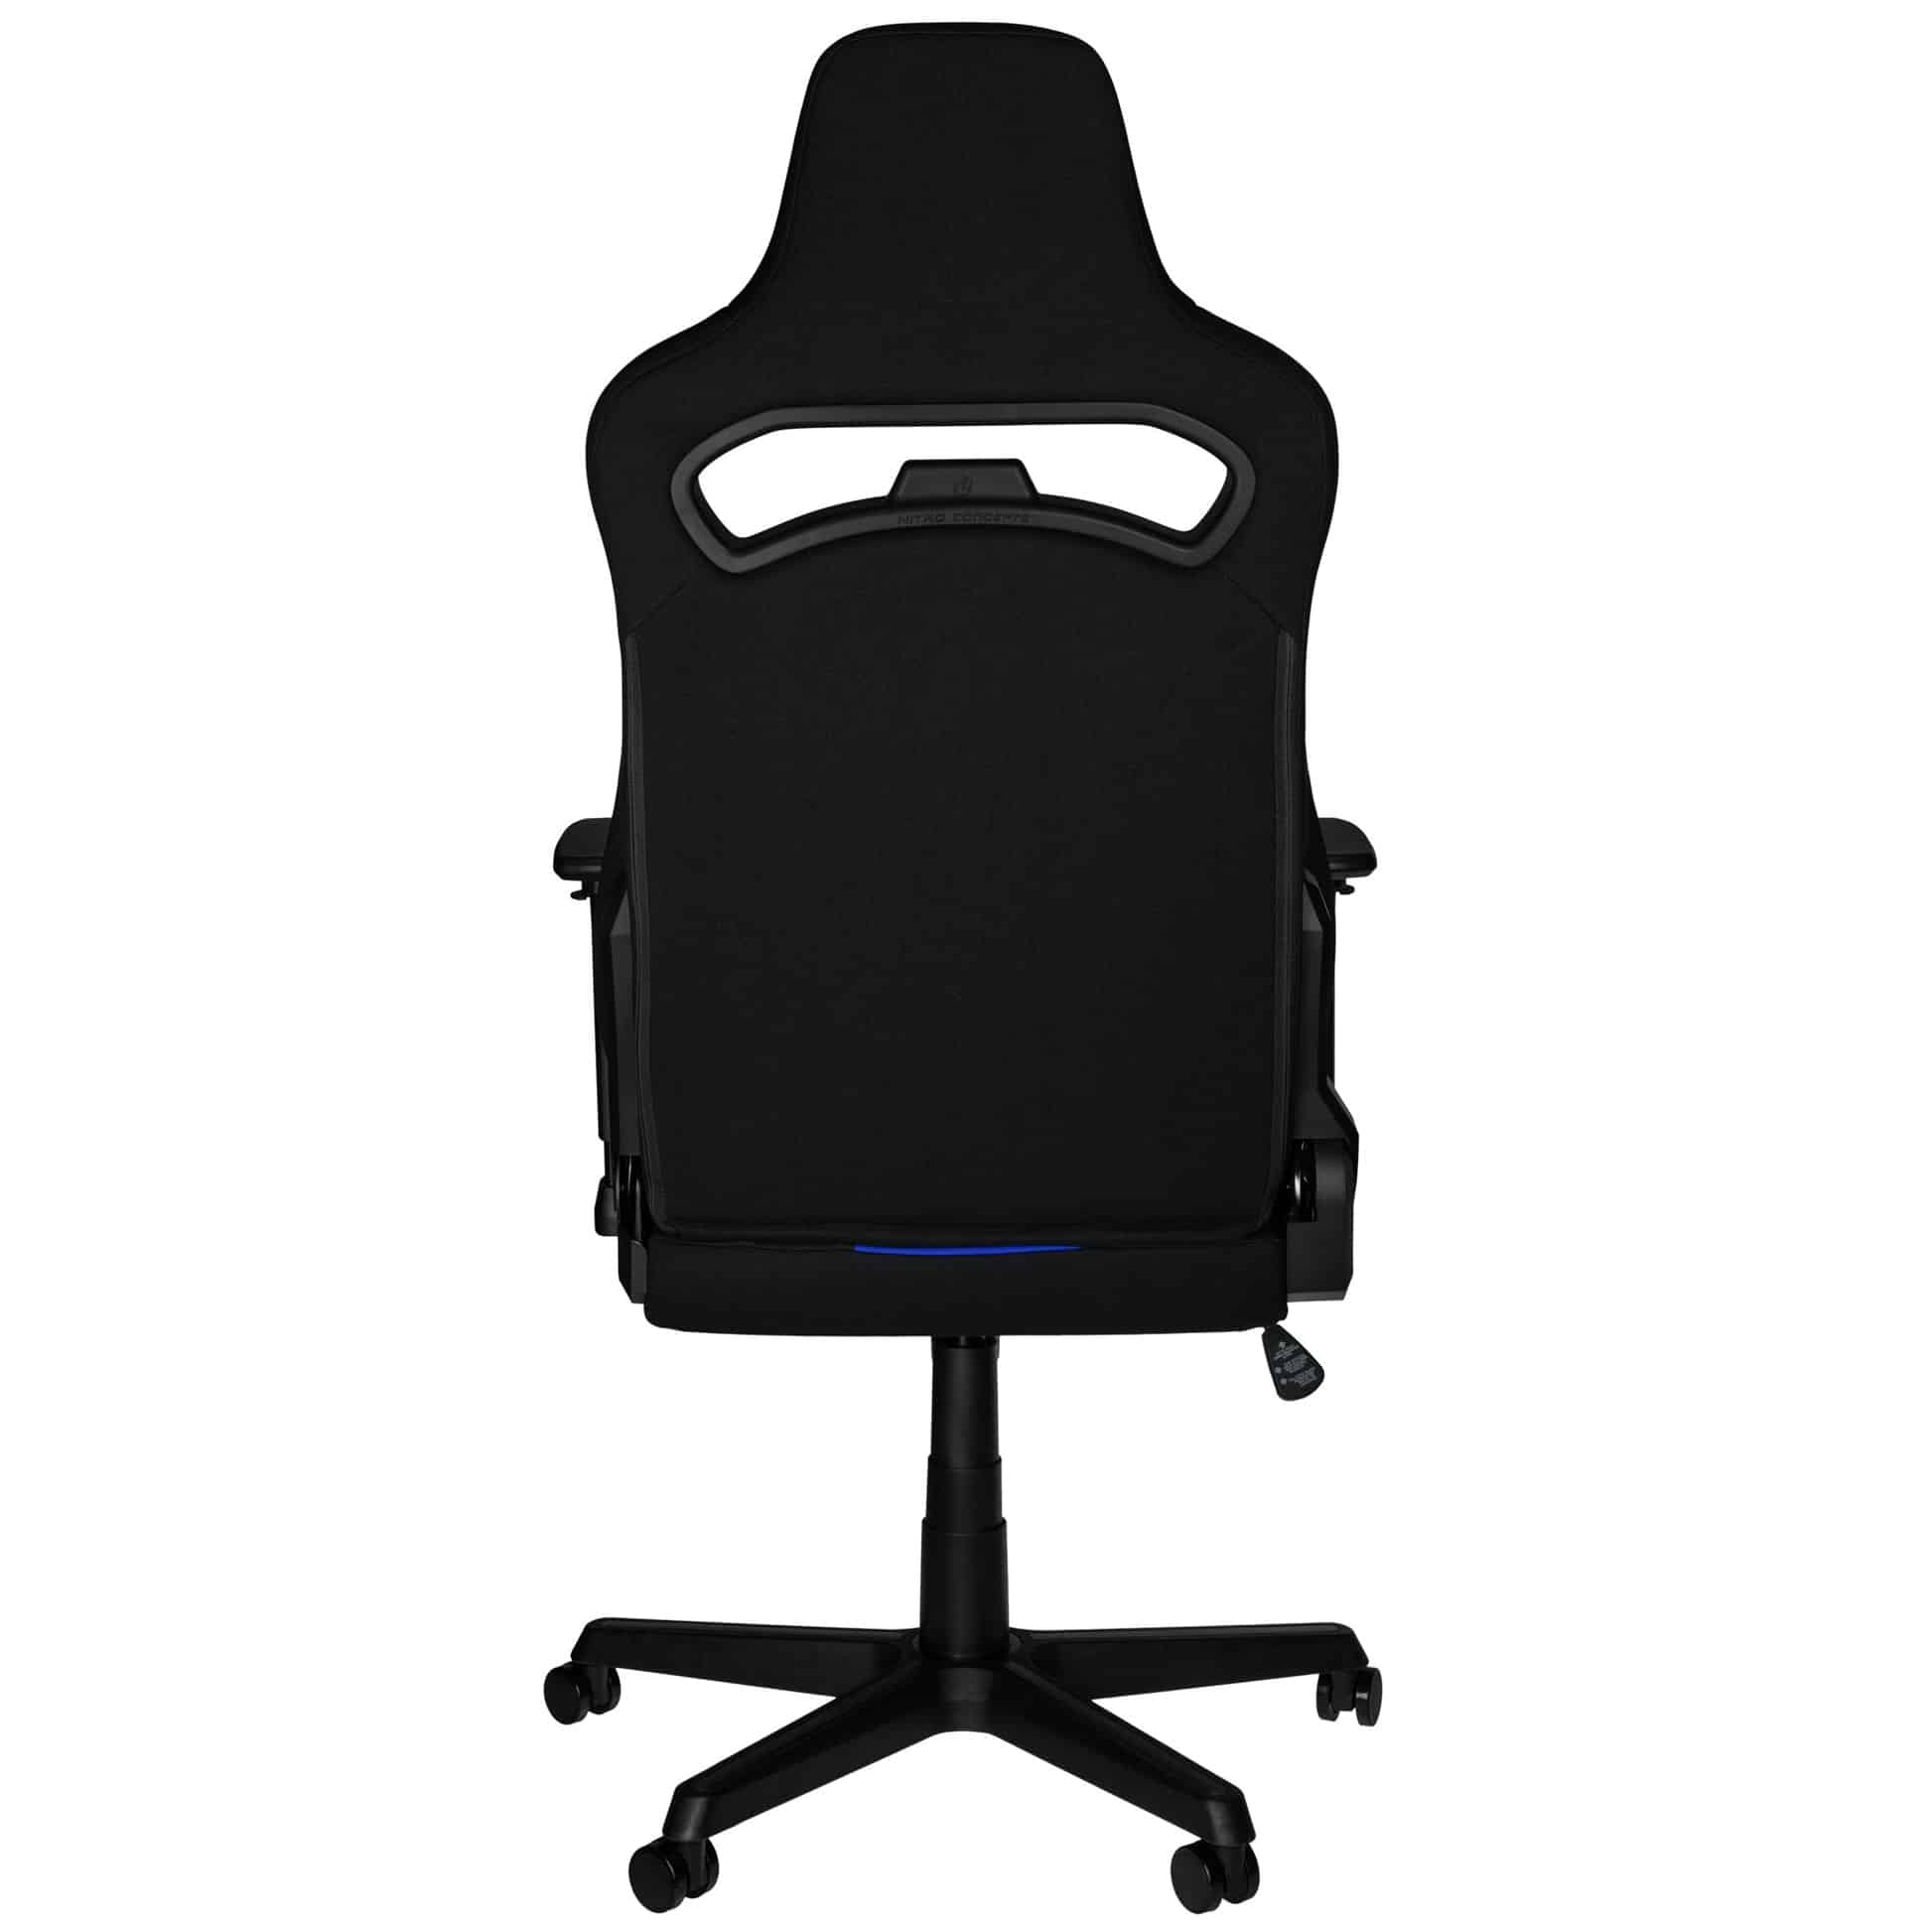 Gamer szék Nitro Concepts E250 Fekete/kék Galactic Blue